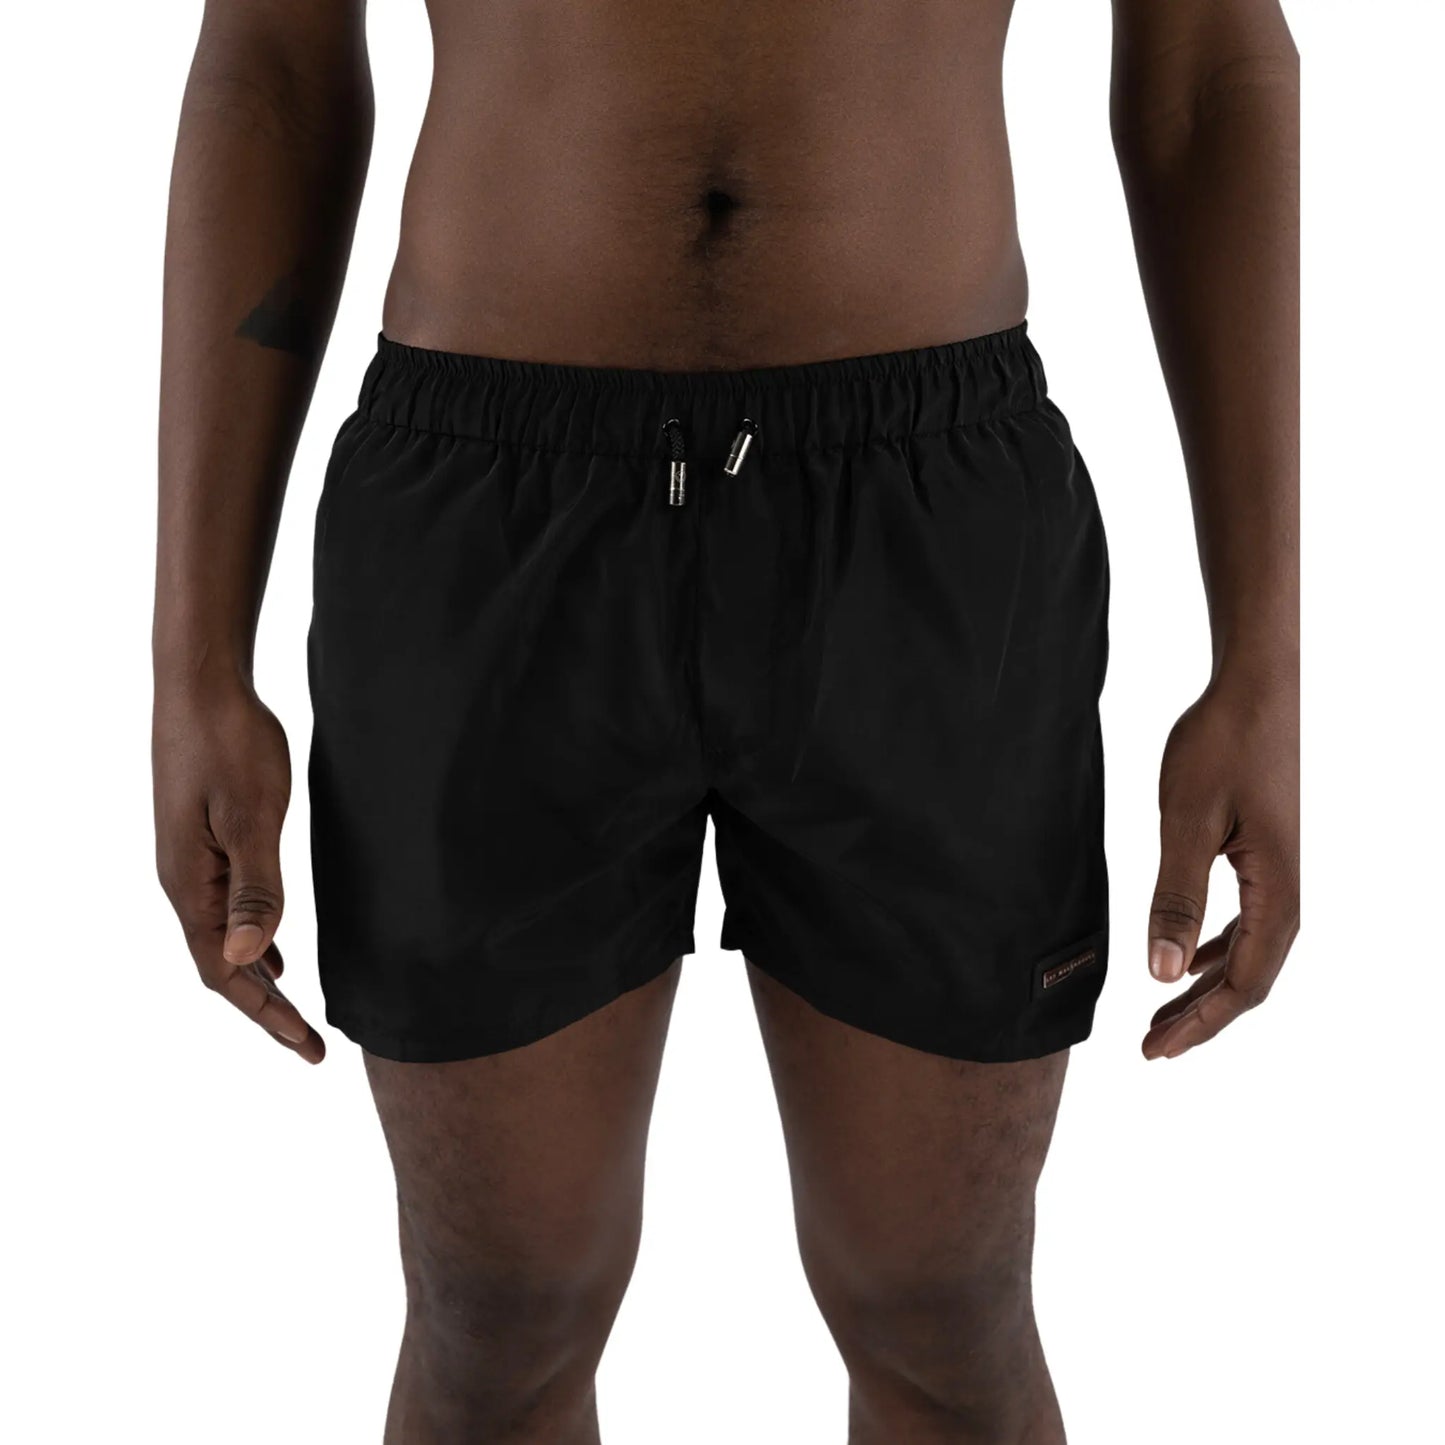 L’Homme Moderne Beachwear Black worn by black man close up view